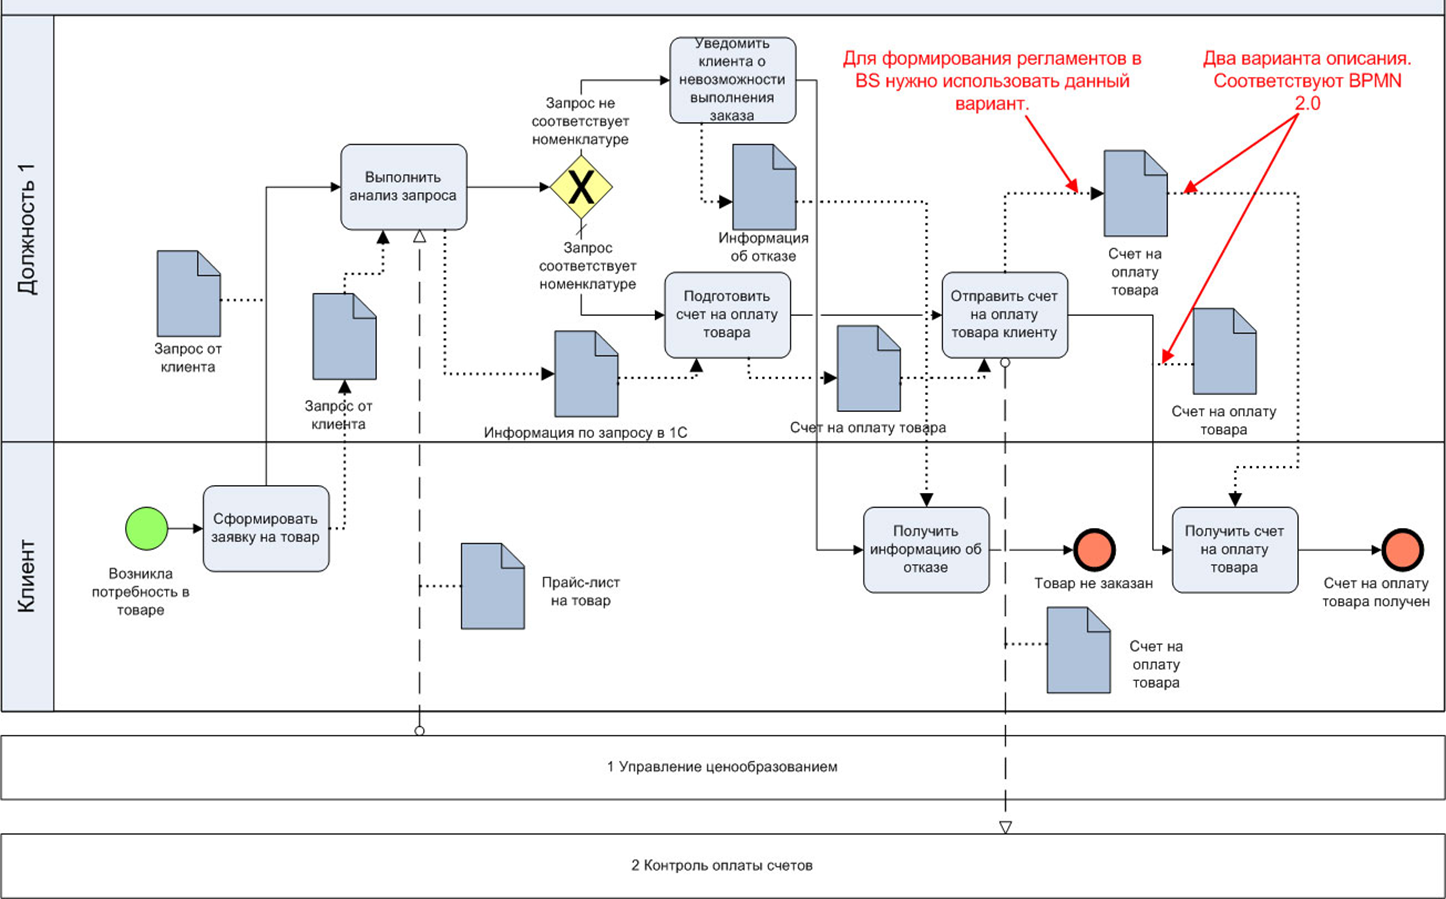 Схема процесса в нотации BPMN. Диаграмма бизнес процессов BPMN 2.0. Схема бизнес процесса в нотации BPMN. Бизнес процесс BPMN 2.0.